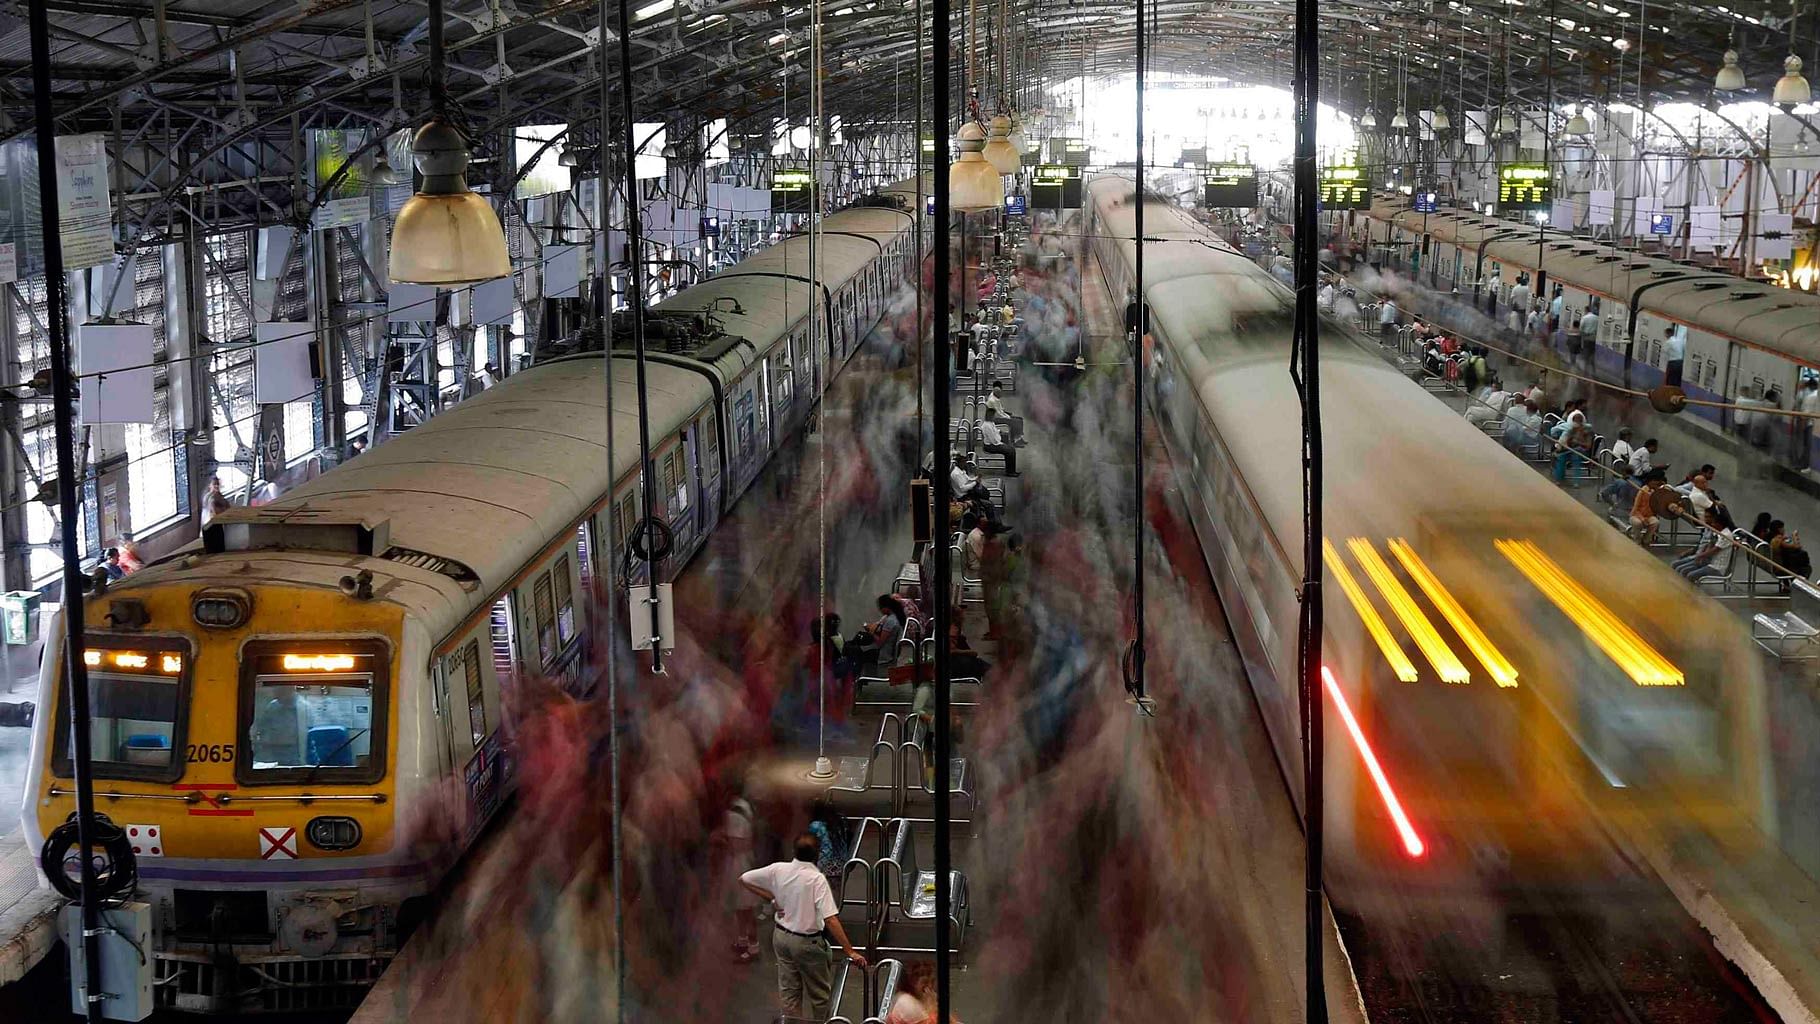 Mumbai’s local trains throw up surprises sometimes. (Photo: Reuters)